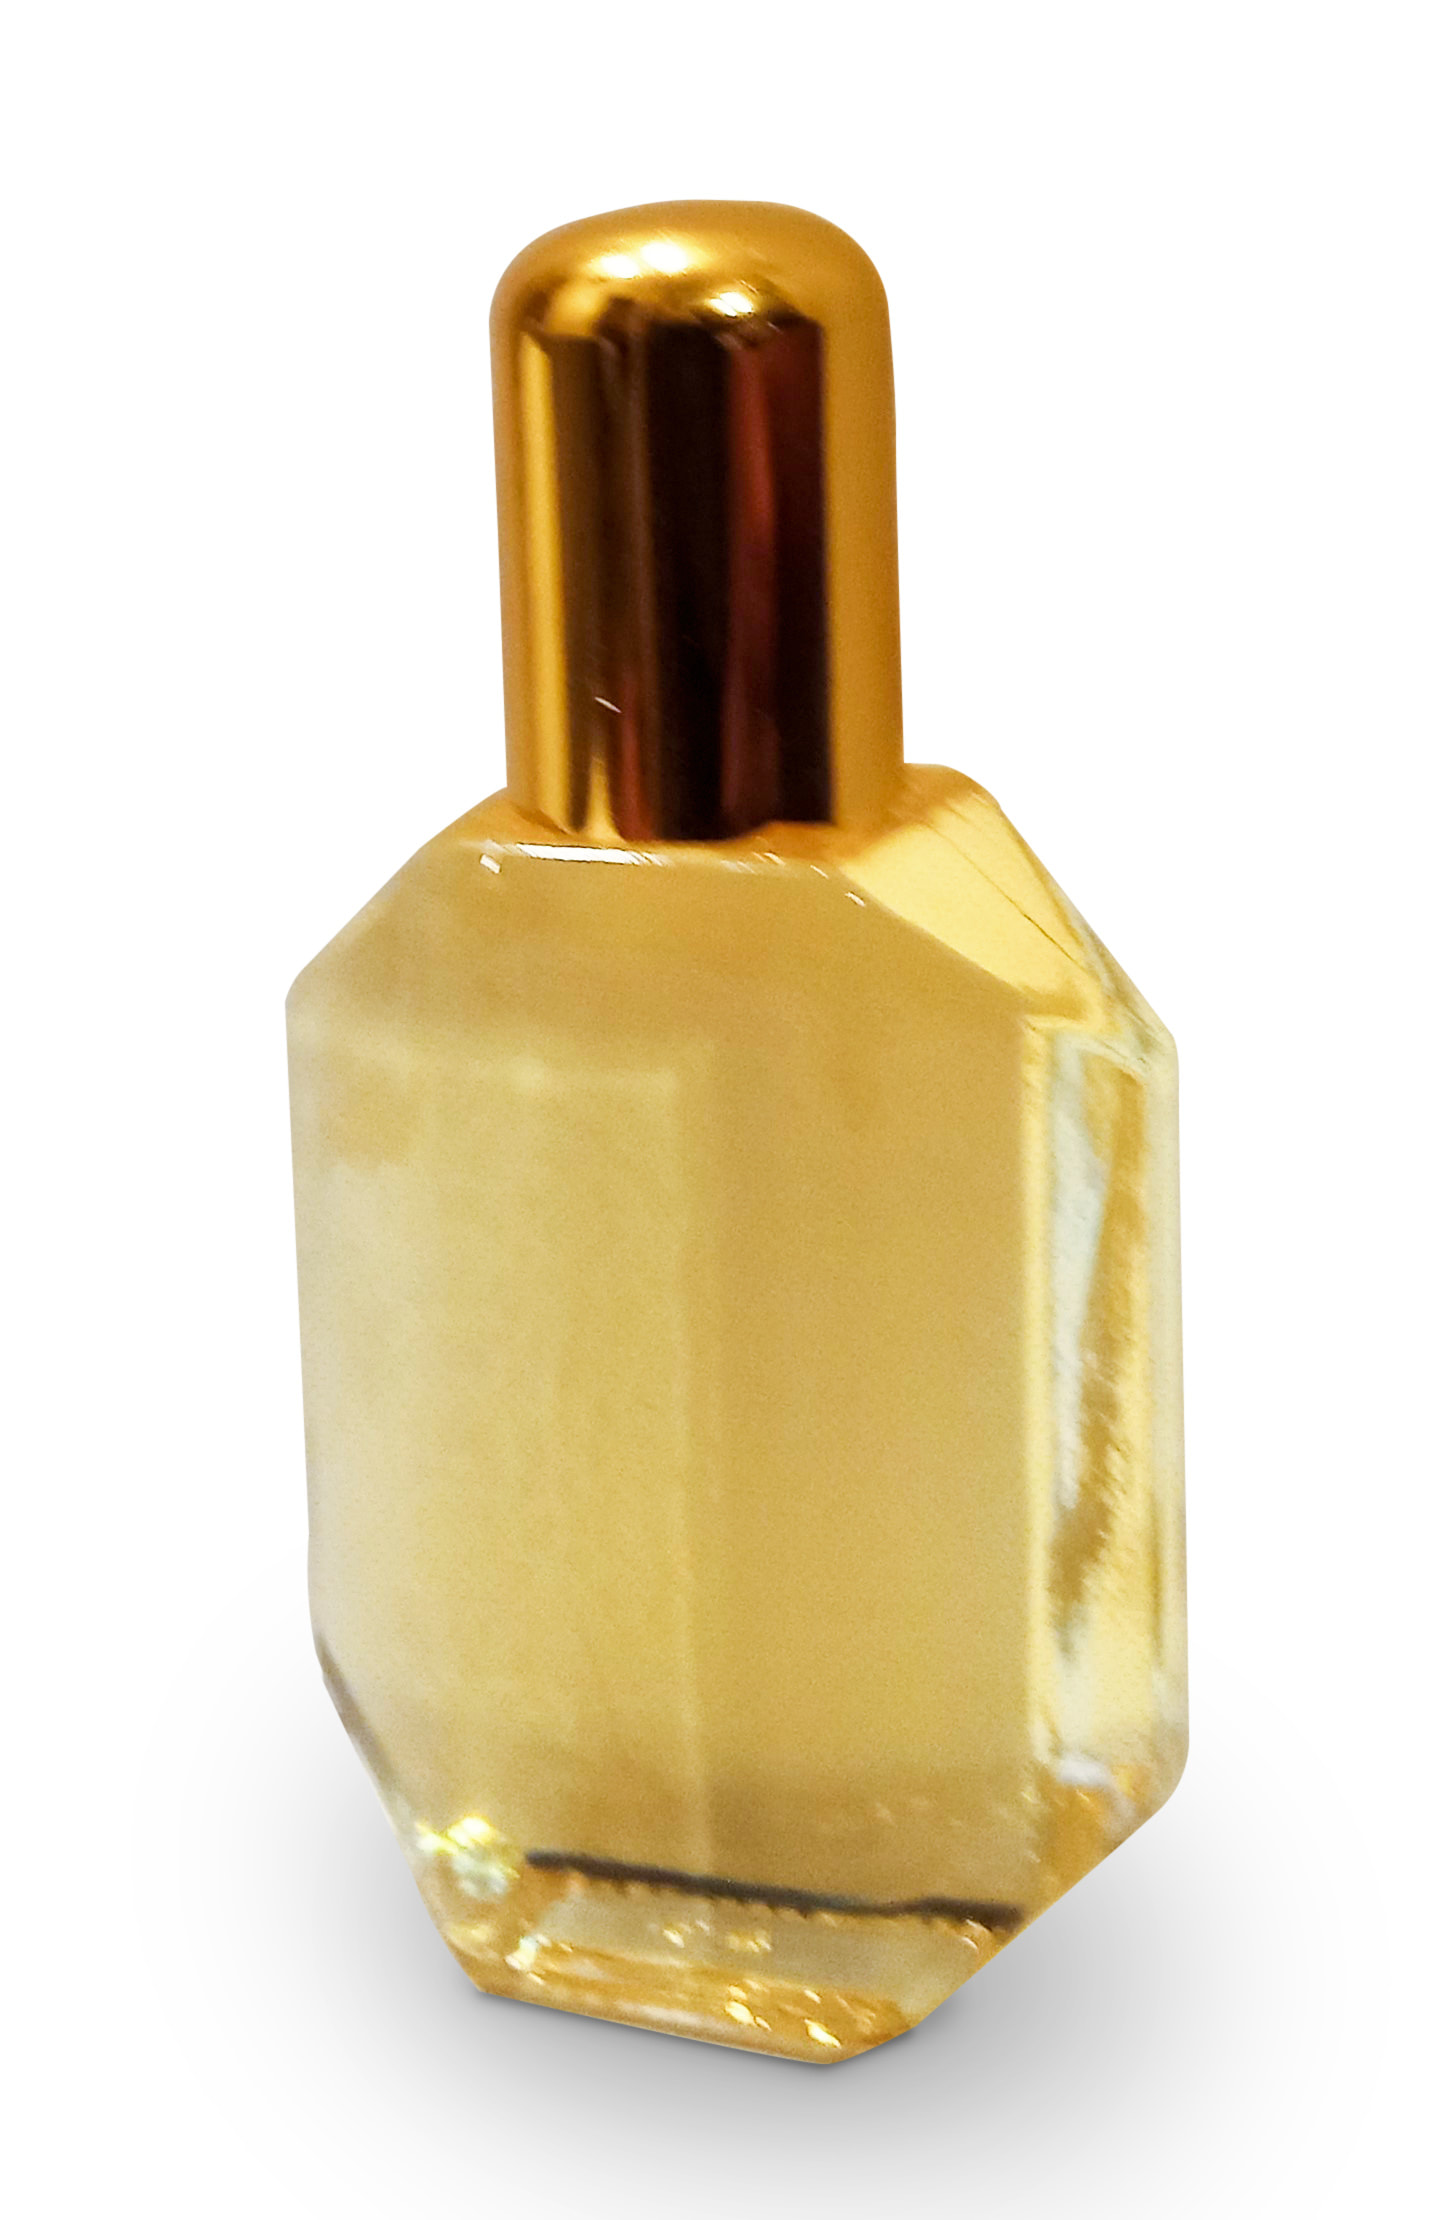 Amber Tonka Bean Home Fragrance Oil: 1/2oz (15ml), Home Fragrance Oils:  1/2oz (15ml)